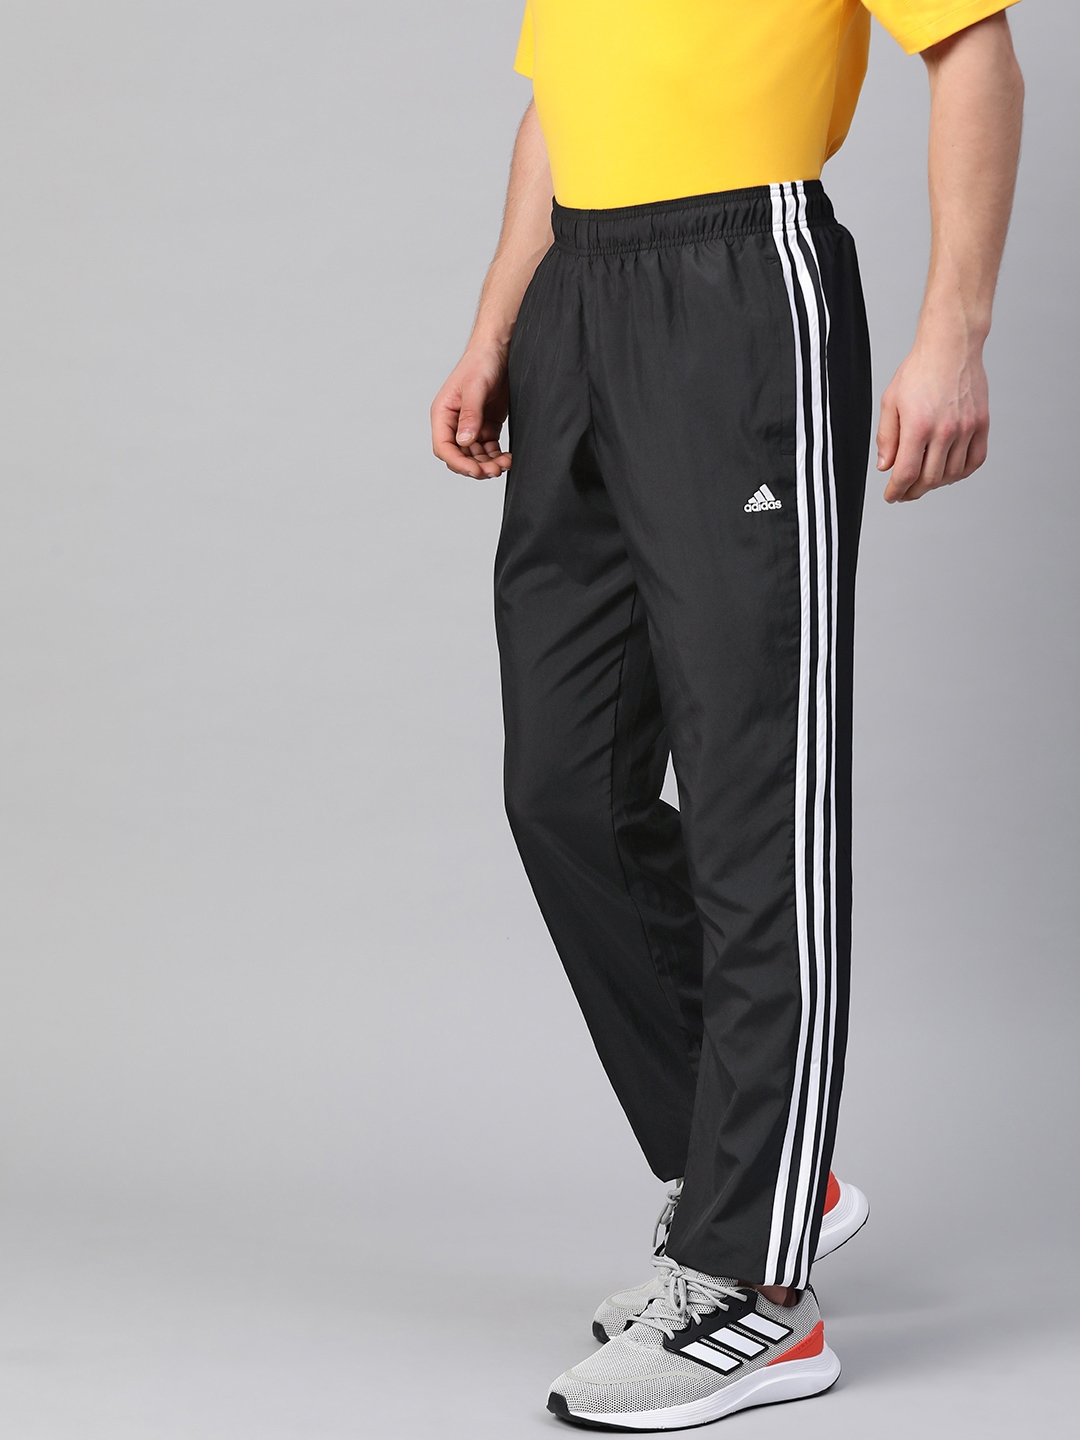 Adidas Originals Velour BB Track Pants, Maroon | Highlights